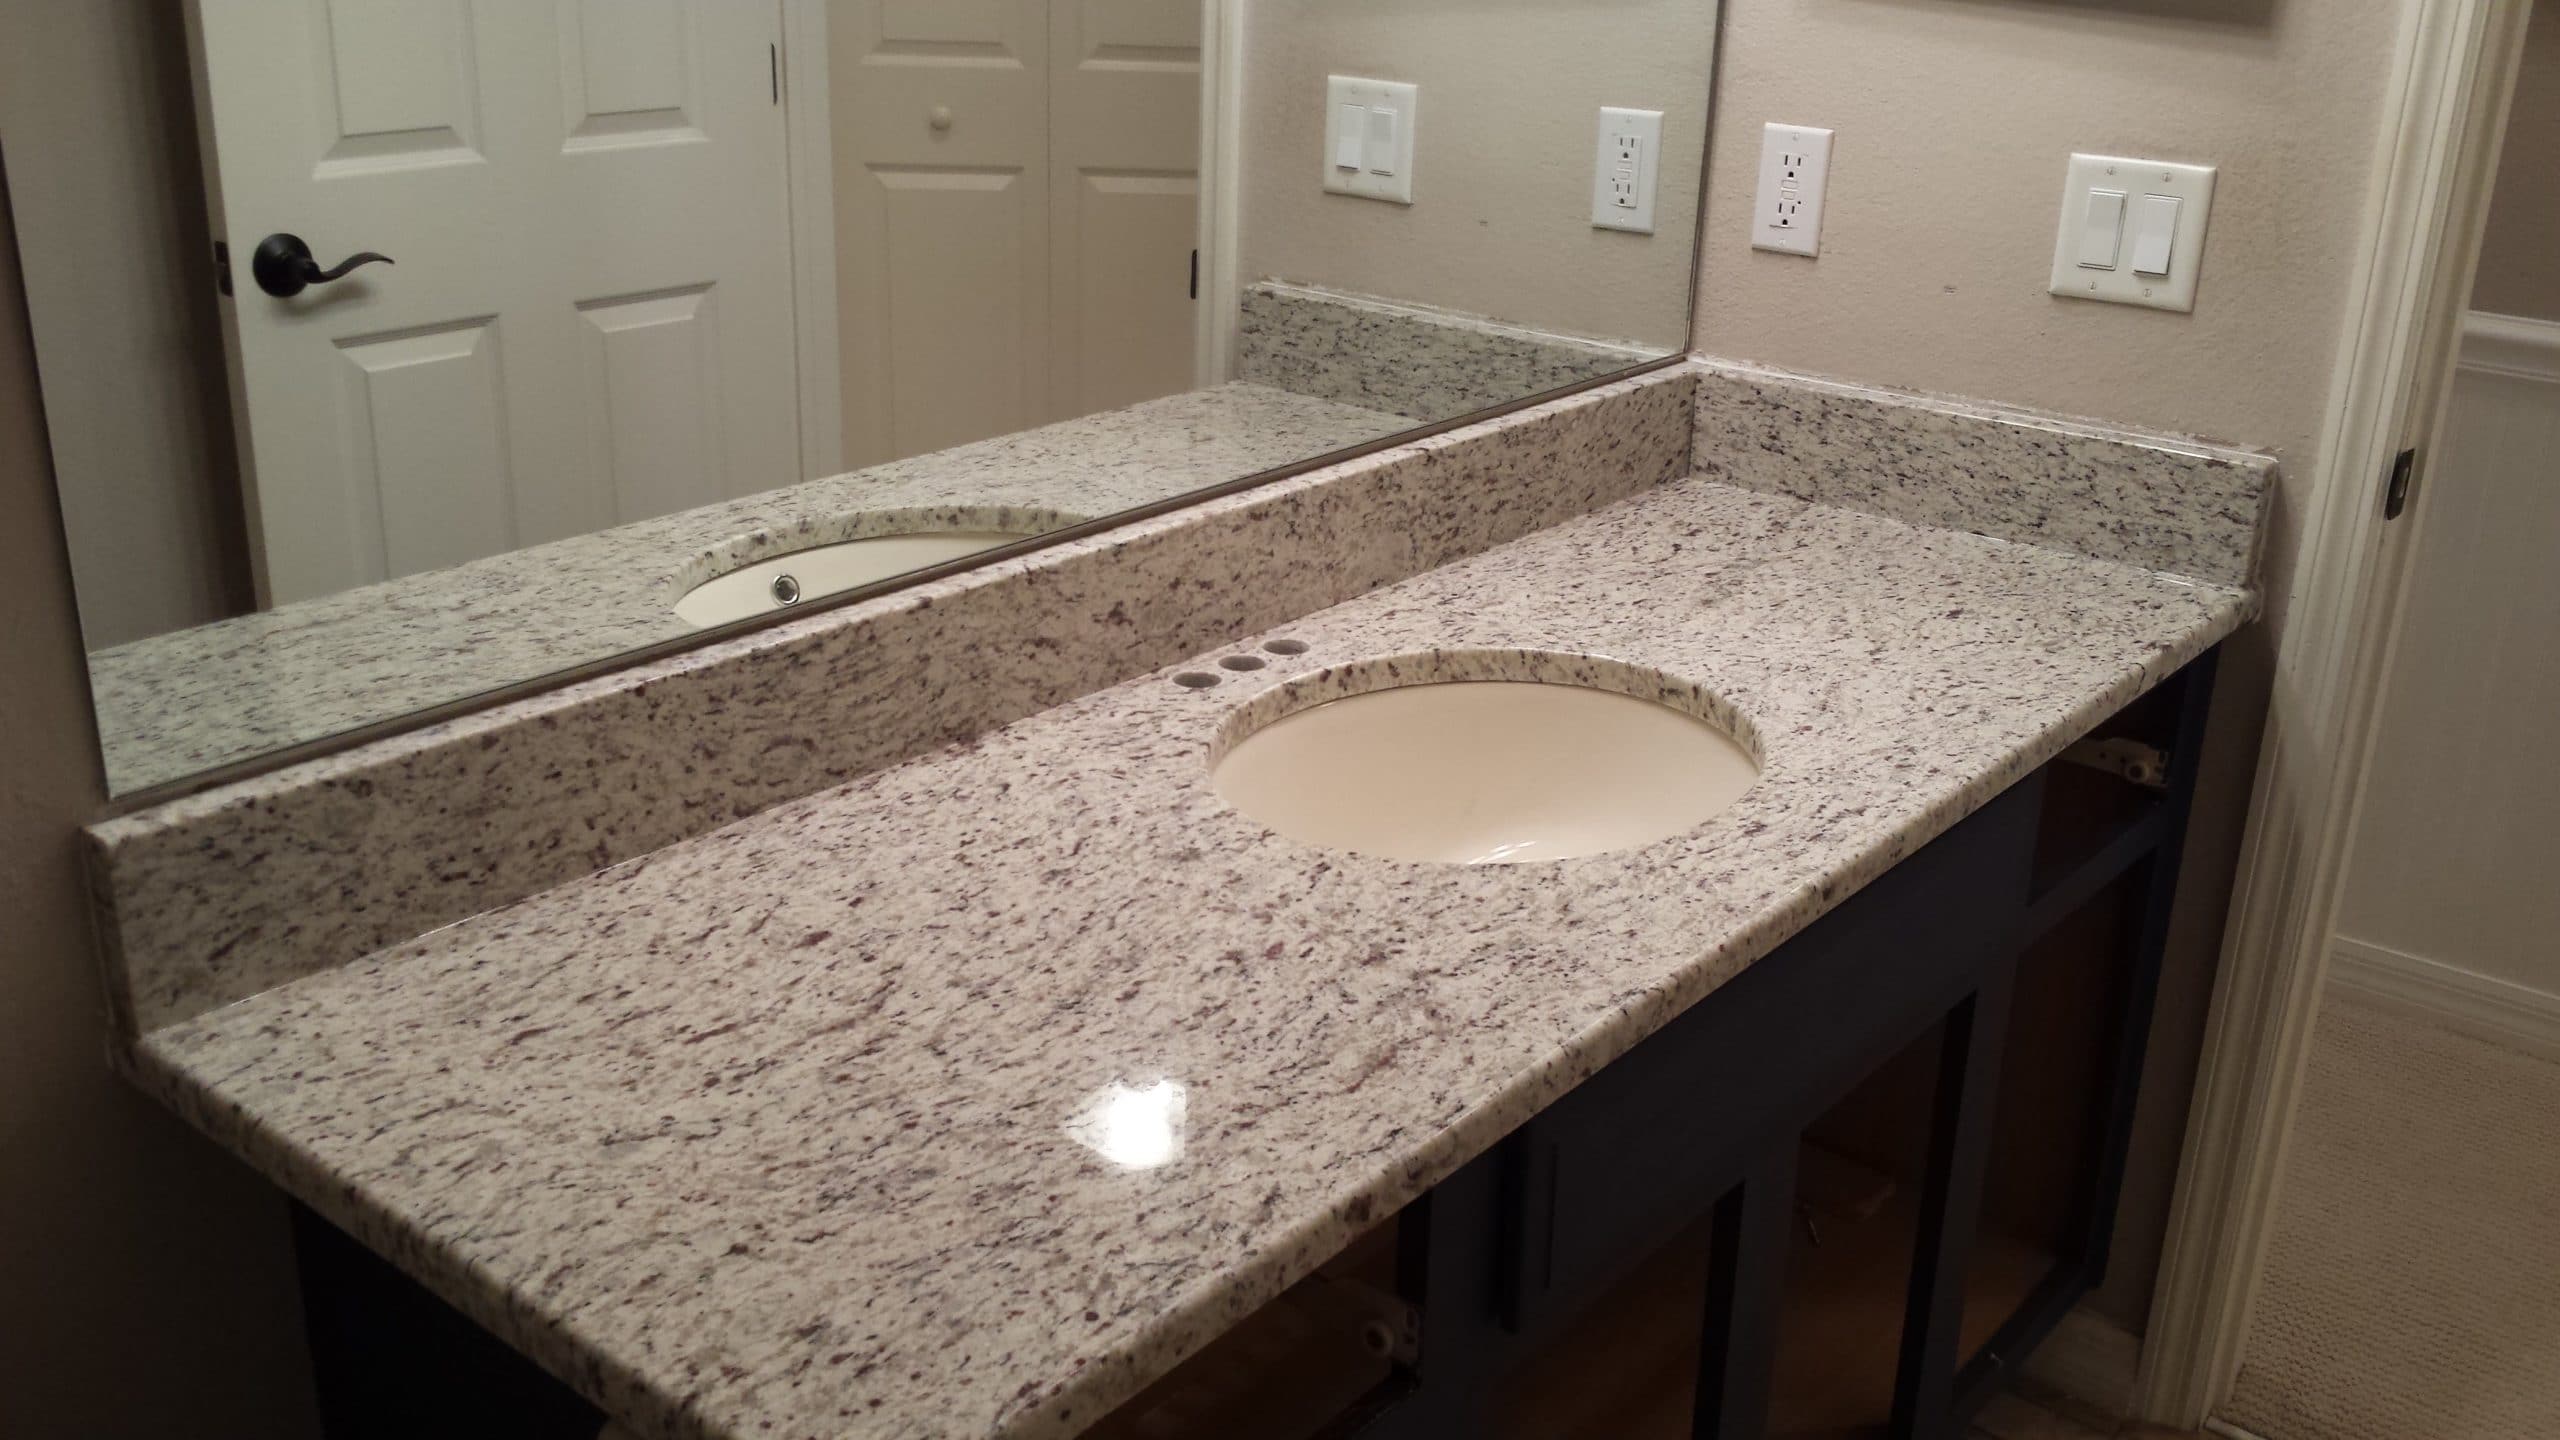 A bathroom countertop in granite?